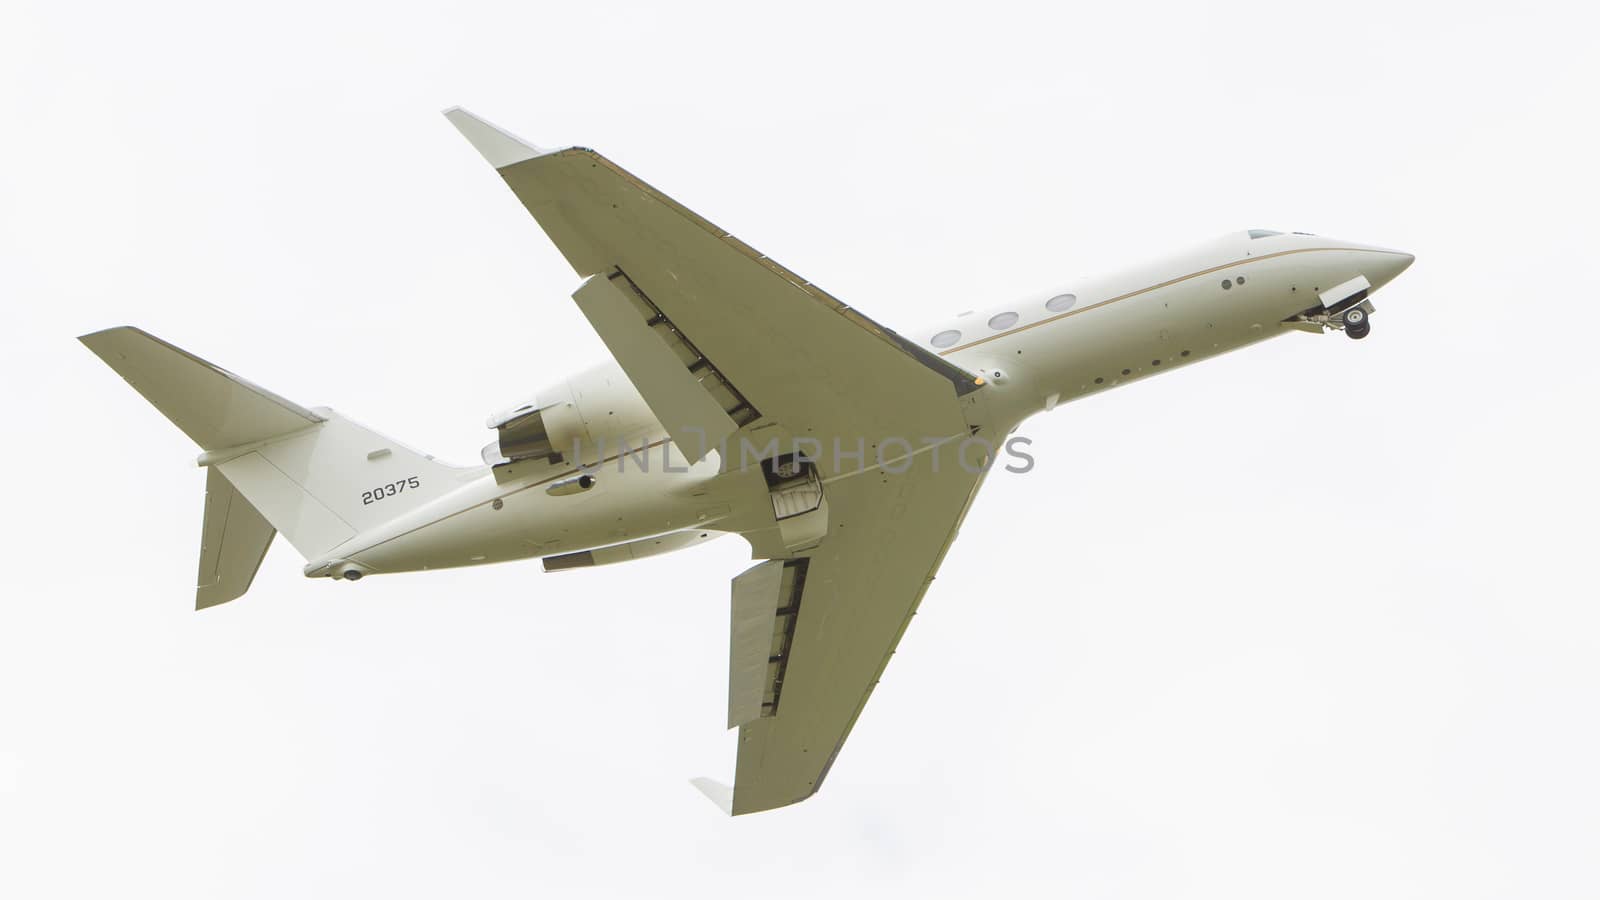 LEEUWARDEN, THE NETHERLANDS - JUNE 10: Air Force Gulfstream Aero by michaklootwijk